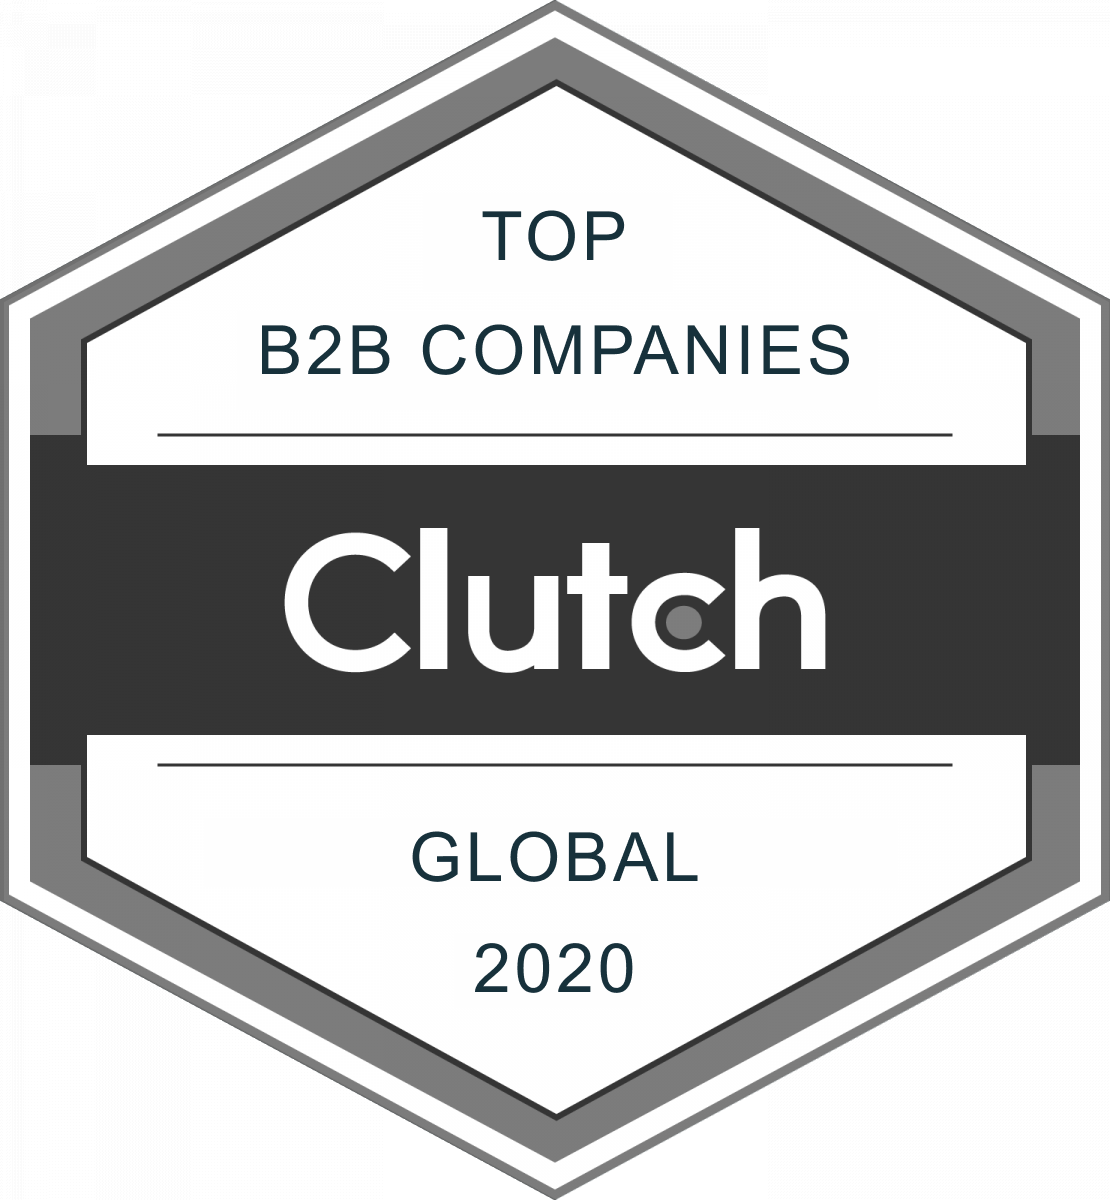 Top B2B Compnaies Clutch - Global